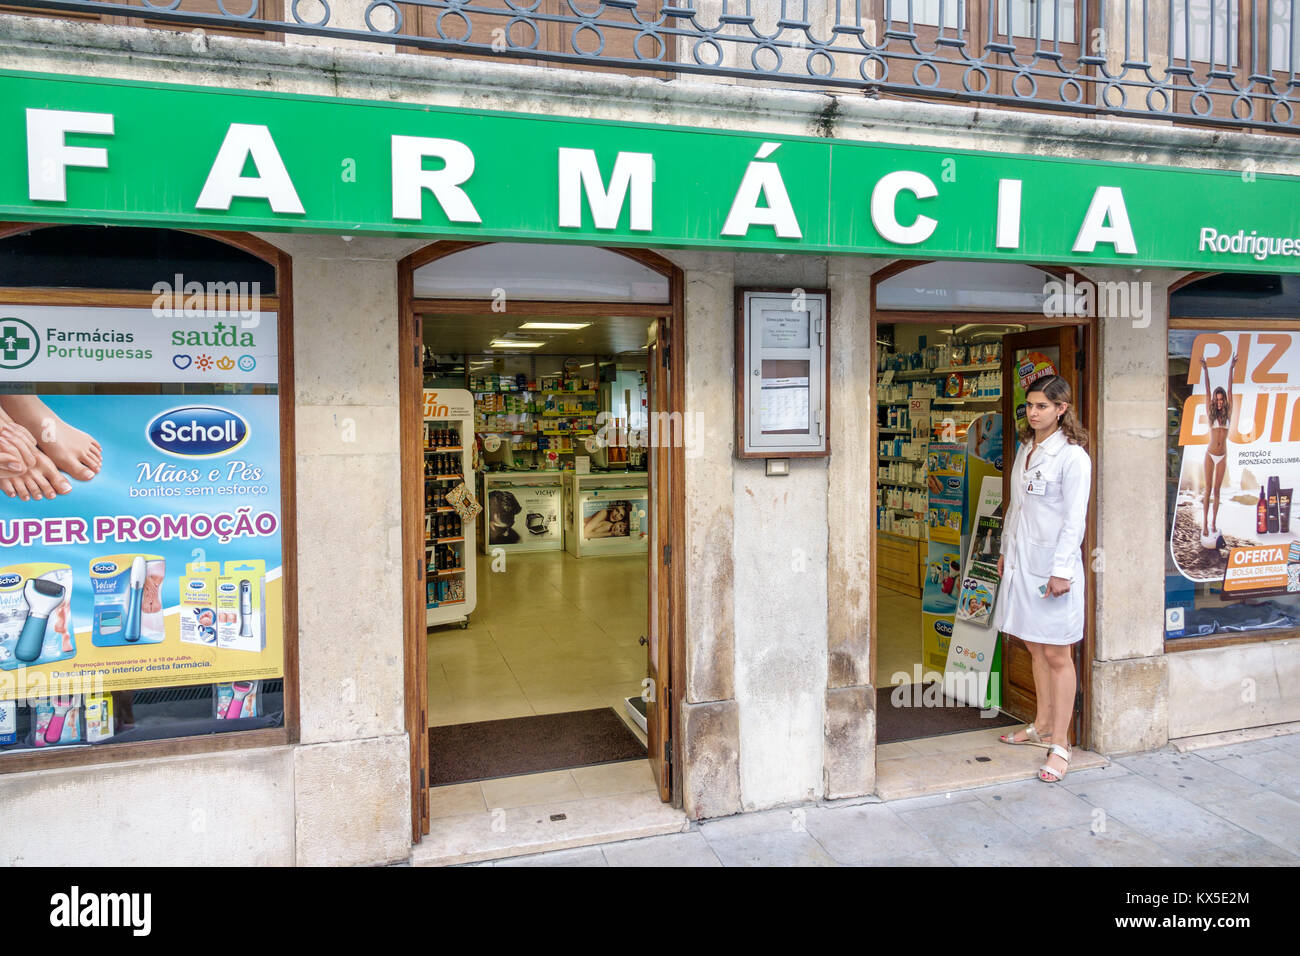 Coimbra Portugal,historic center,Rua Ferreira Borges,Farmacia Rodrigues Da Silva,pharmacy,storefront,entrance,door,Dr. Scholl,foot care,poster,promoti Stock Photo